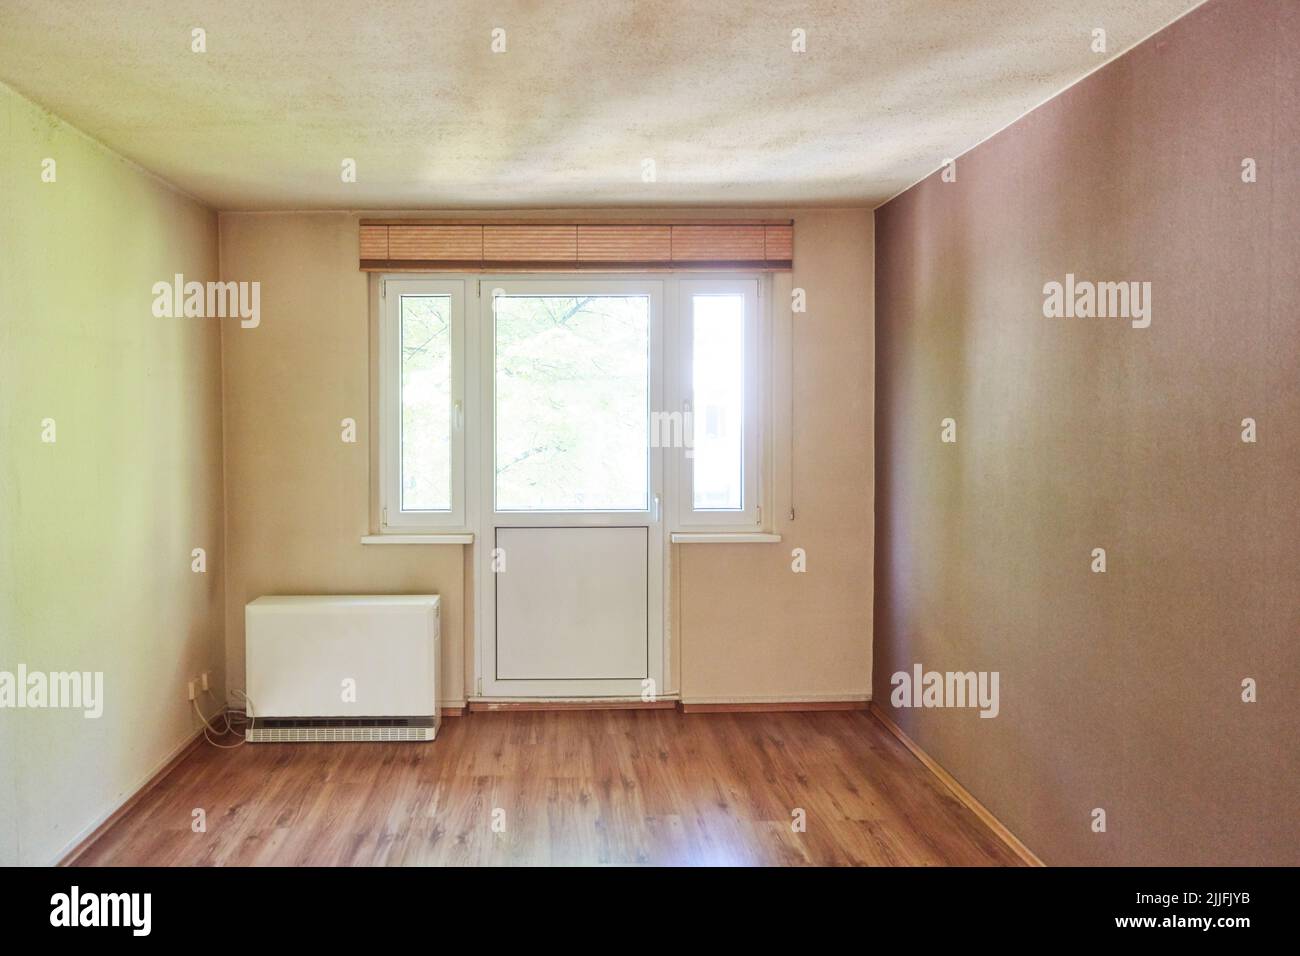 Empty room in need of renovation with balcony door and night storage heater Stock Photo